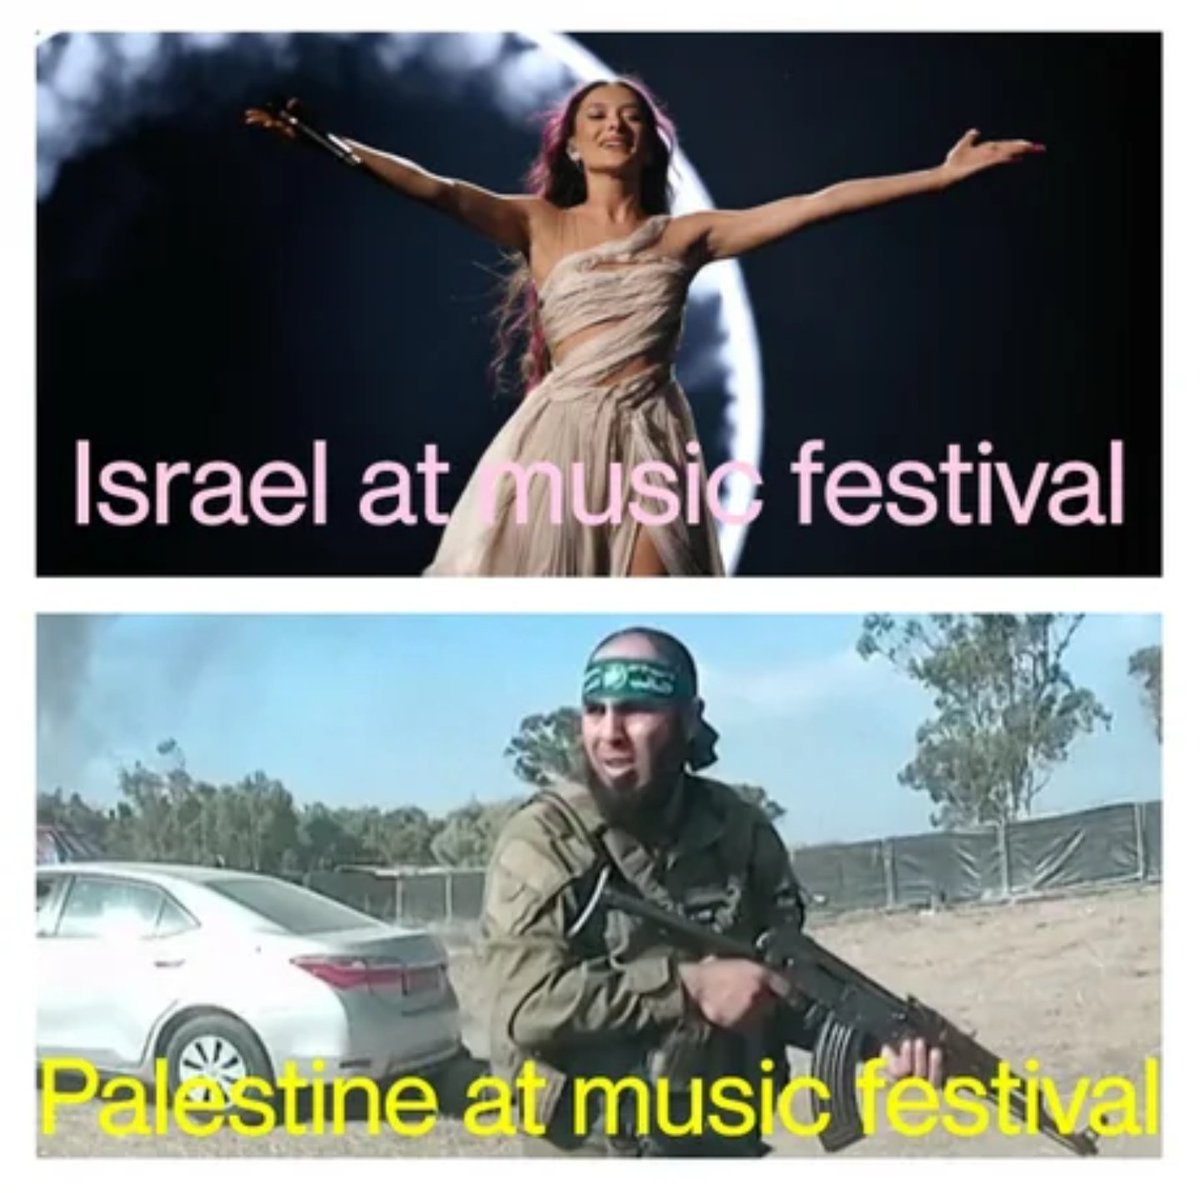 Israel 🇮🇱 at music festival vs Palestine 🇵🇸 at music festival